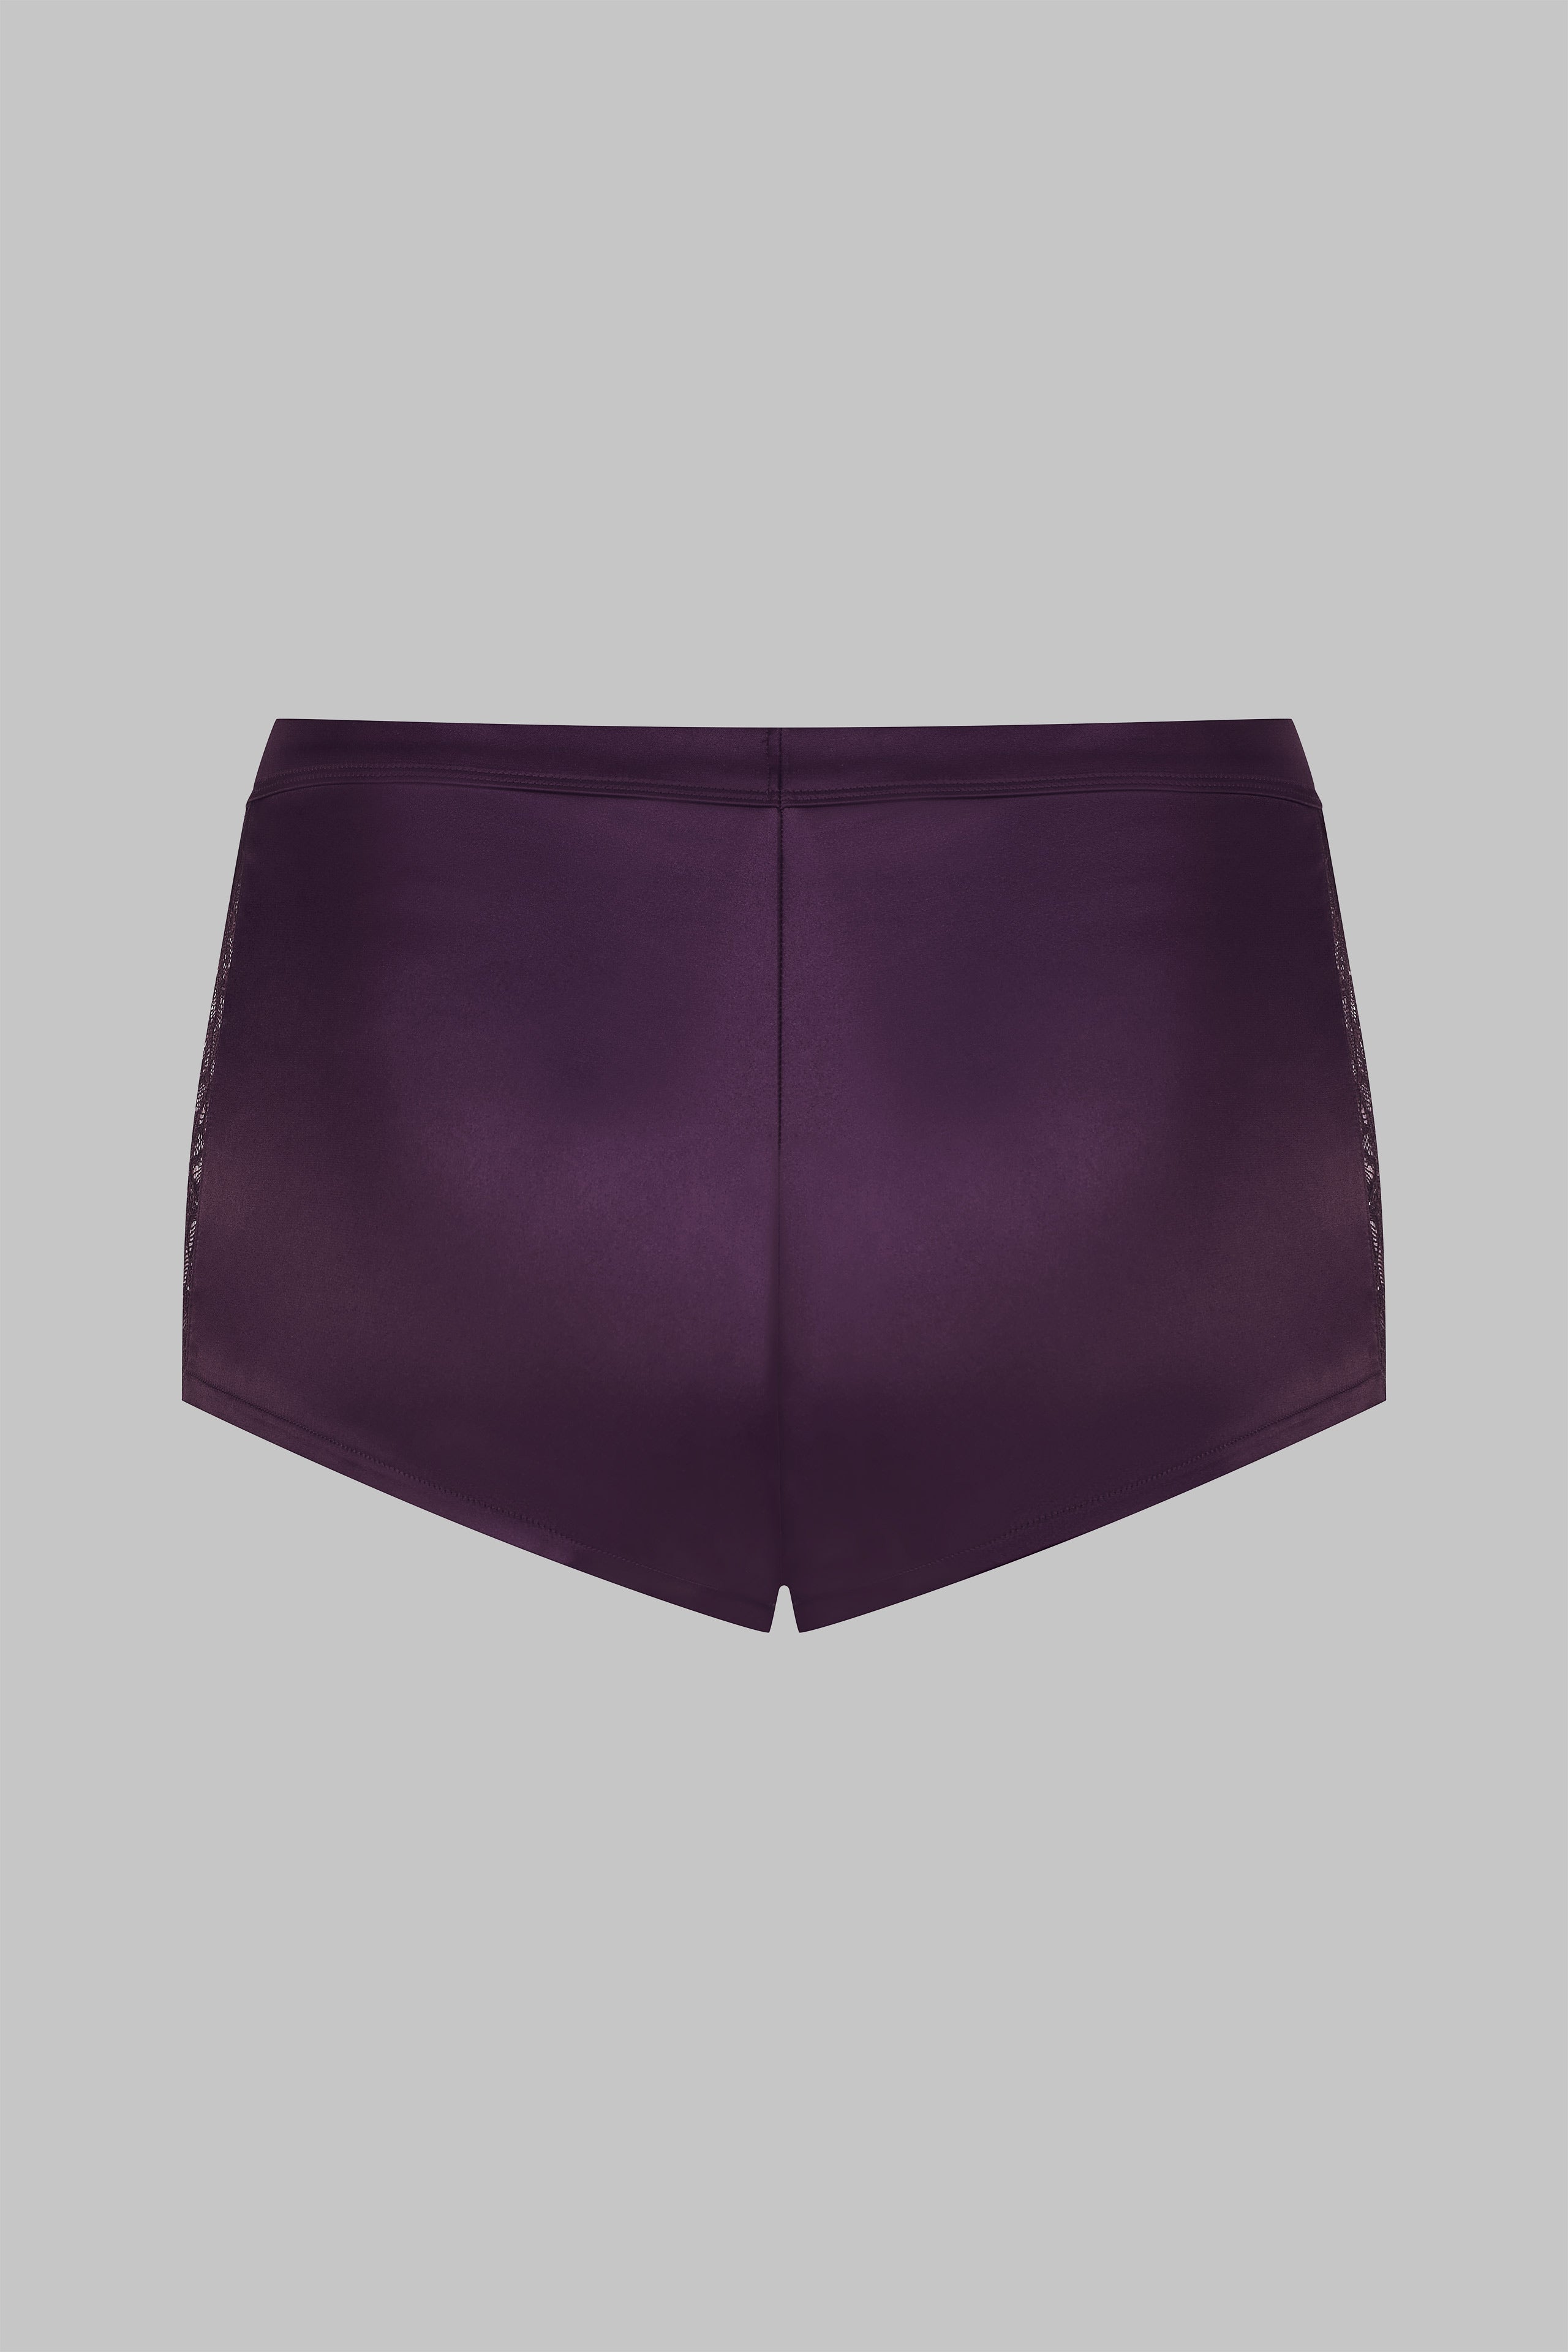 Maison Close VILLA SATINE - Mini skirt - purple - Zalando.de